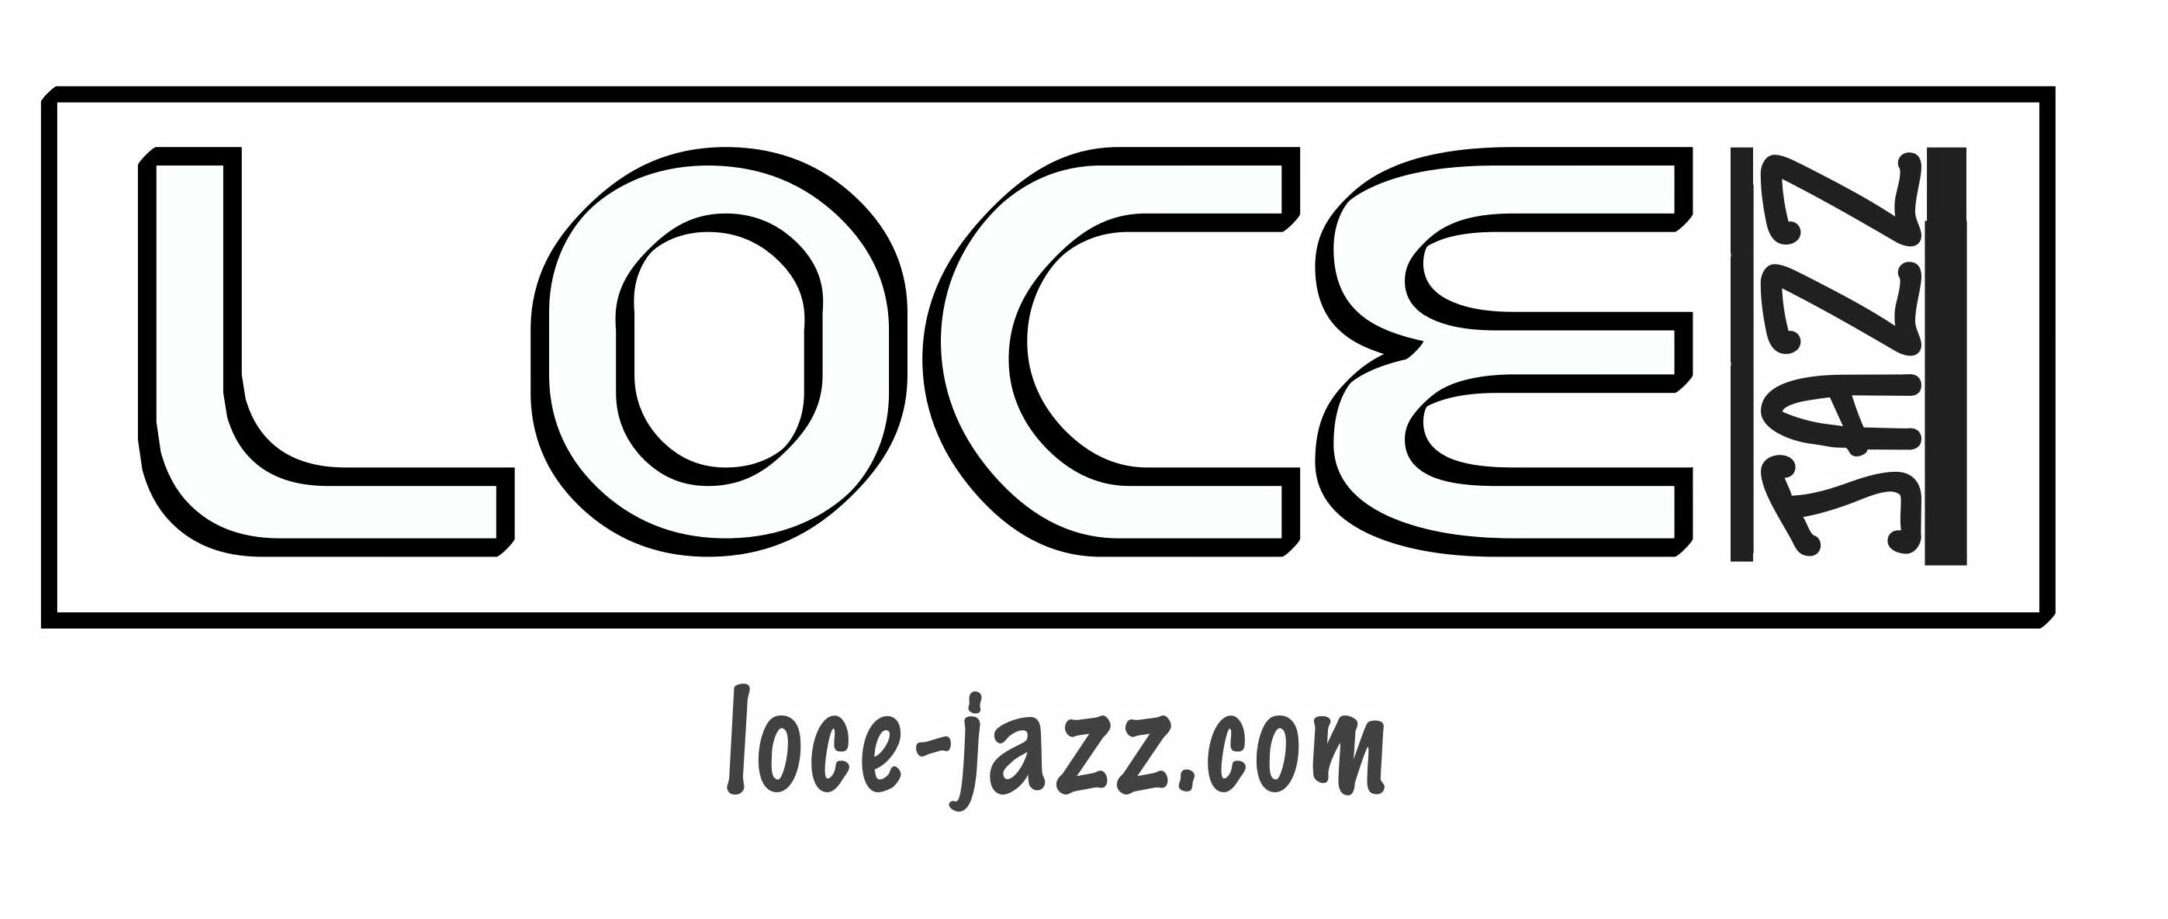 Loce-Jazz, LLC